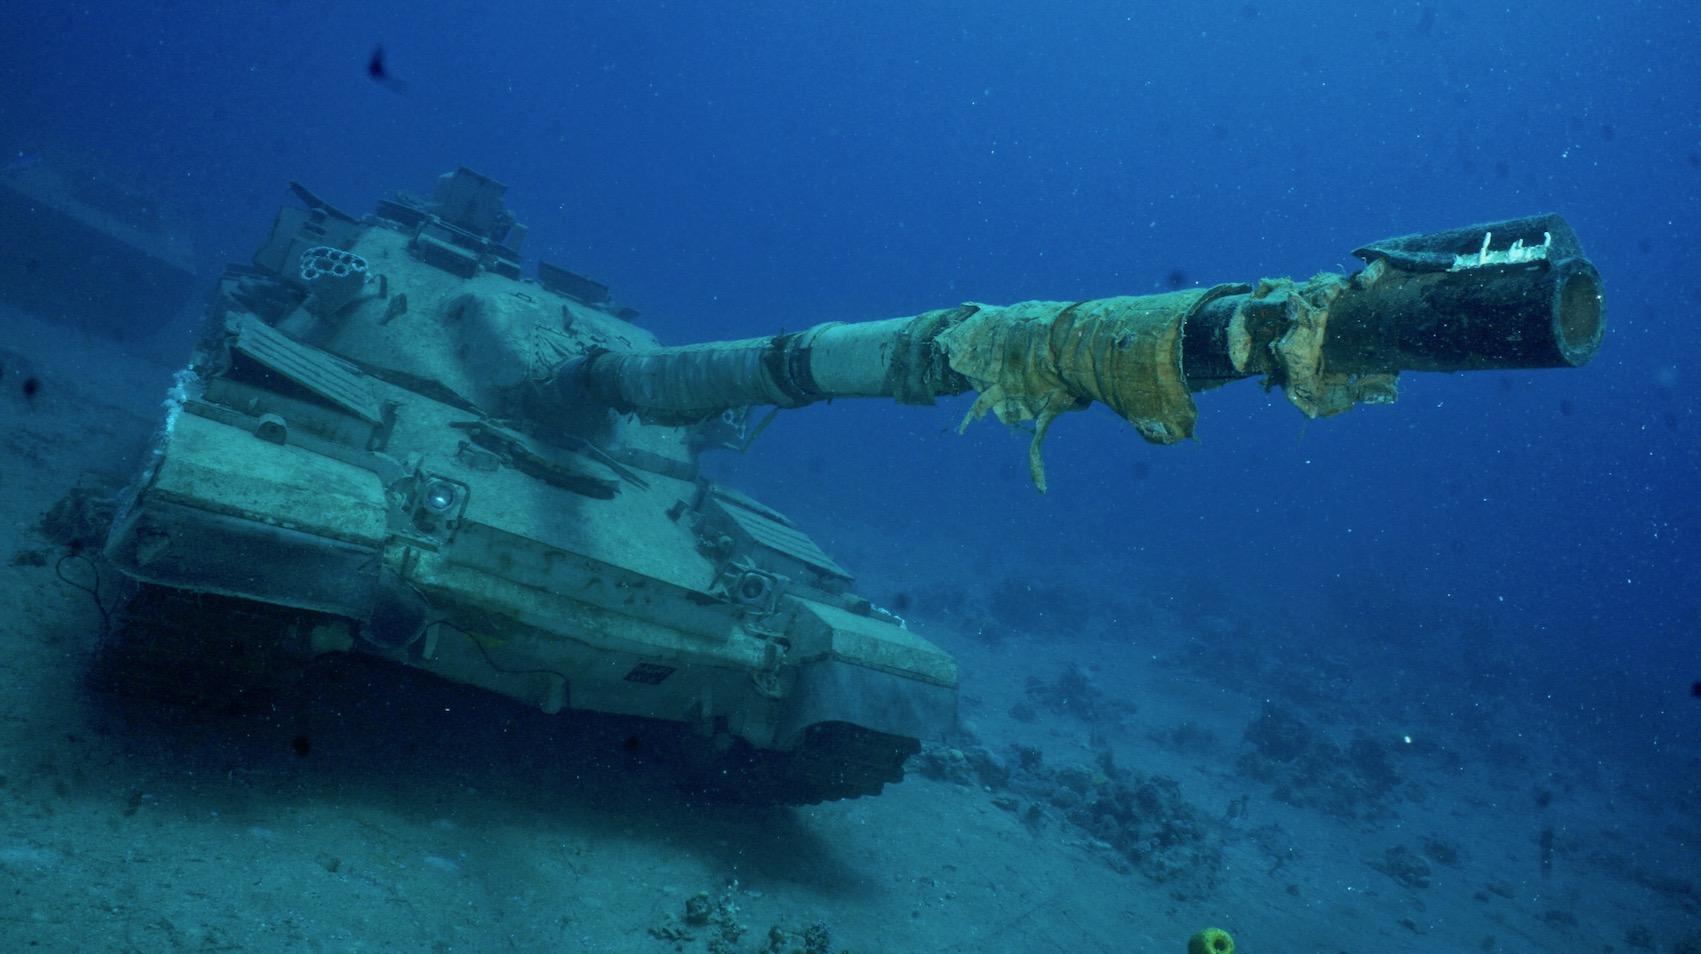 Underwater Military Museum